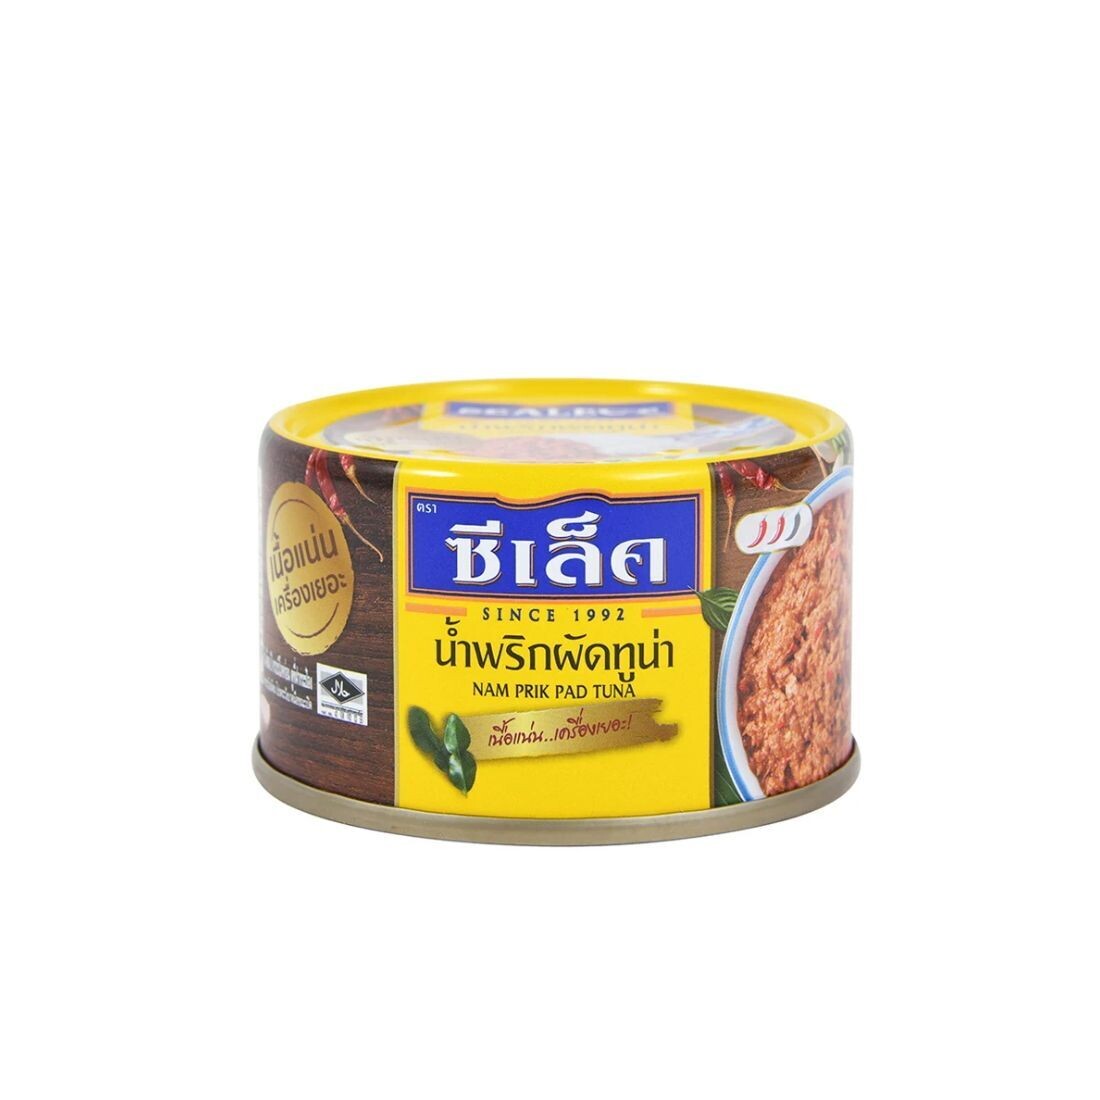 Nam Prik Pad Tuna (Ready to eat)